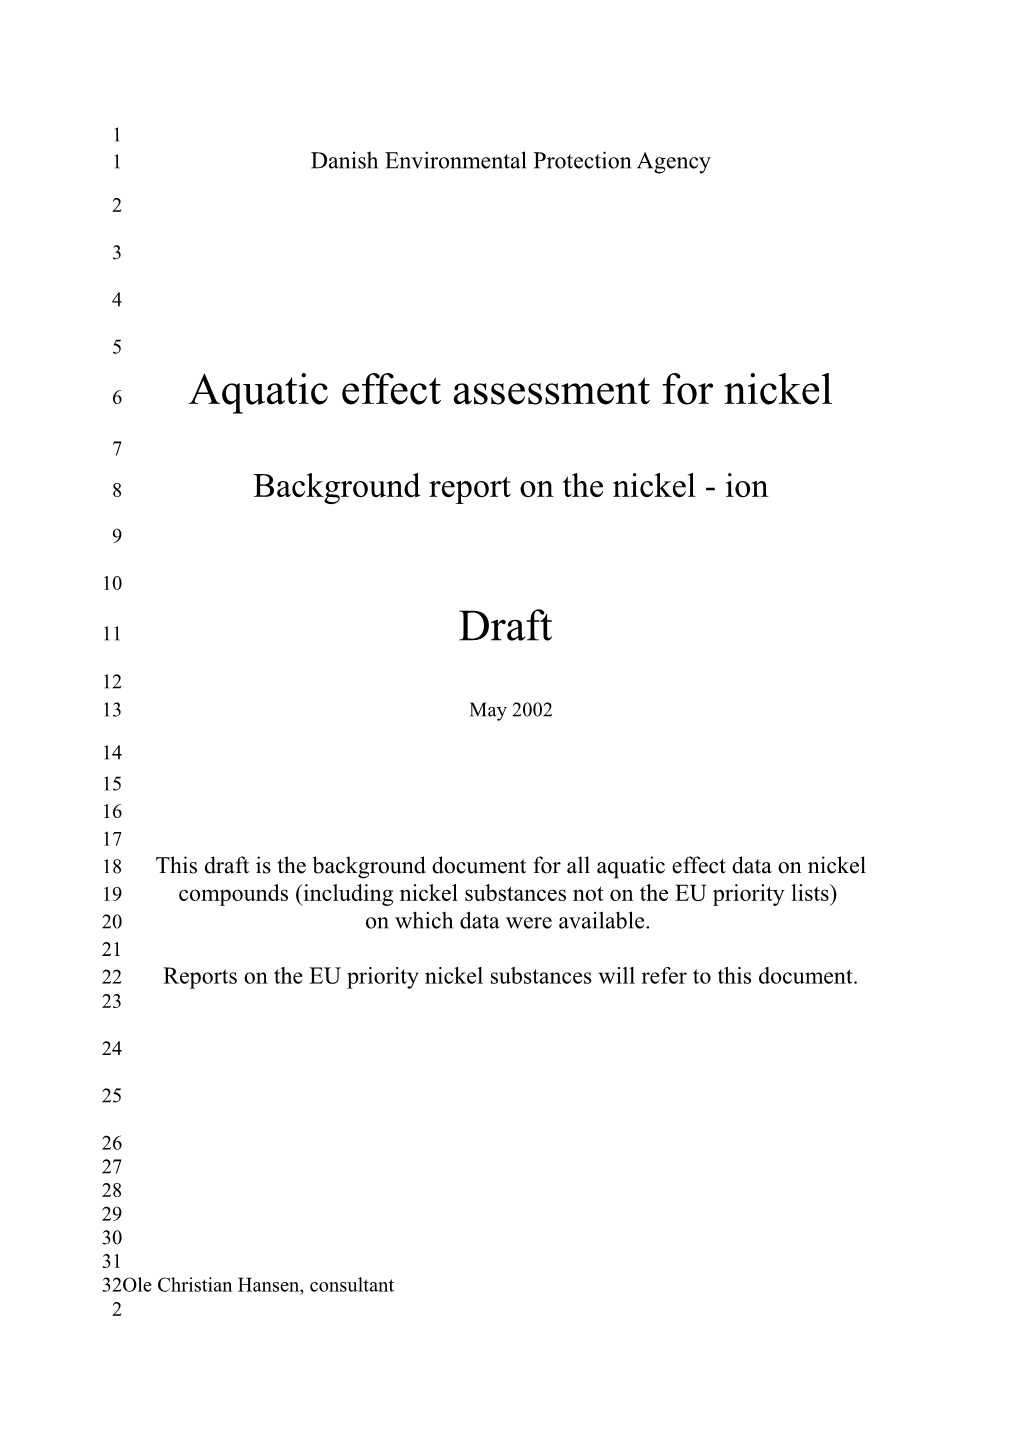 Aquatic Effect Assessment for Nickel